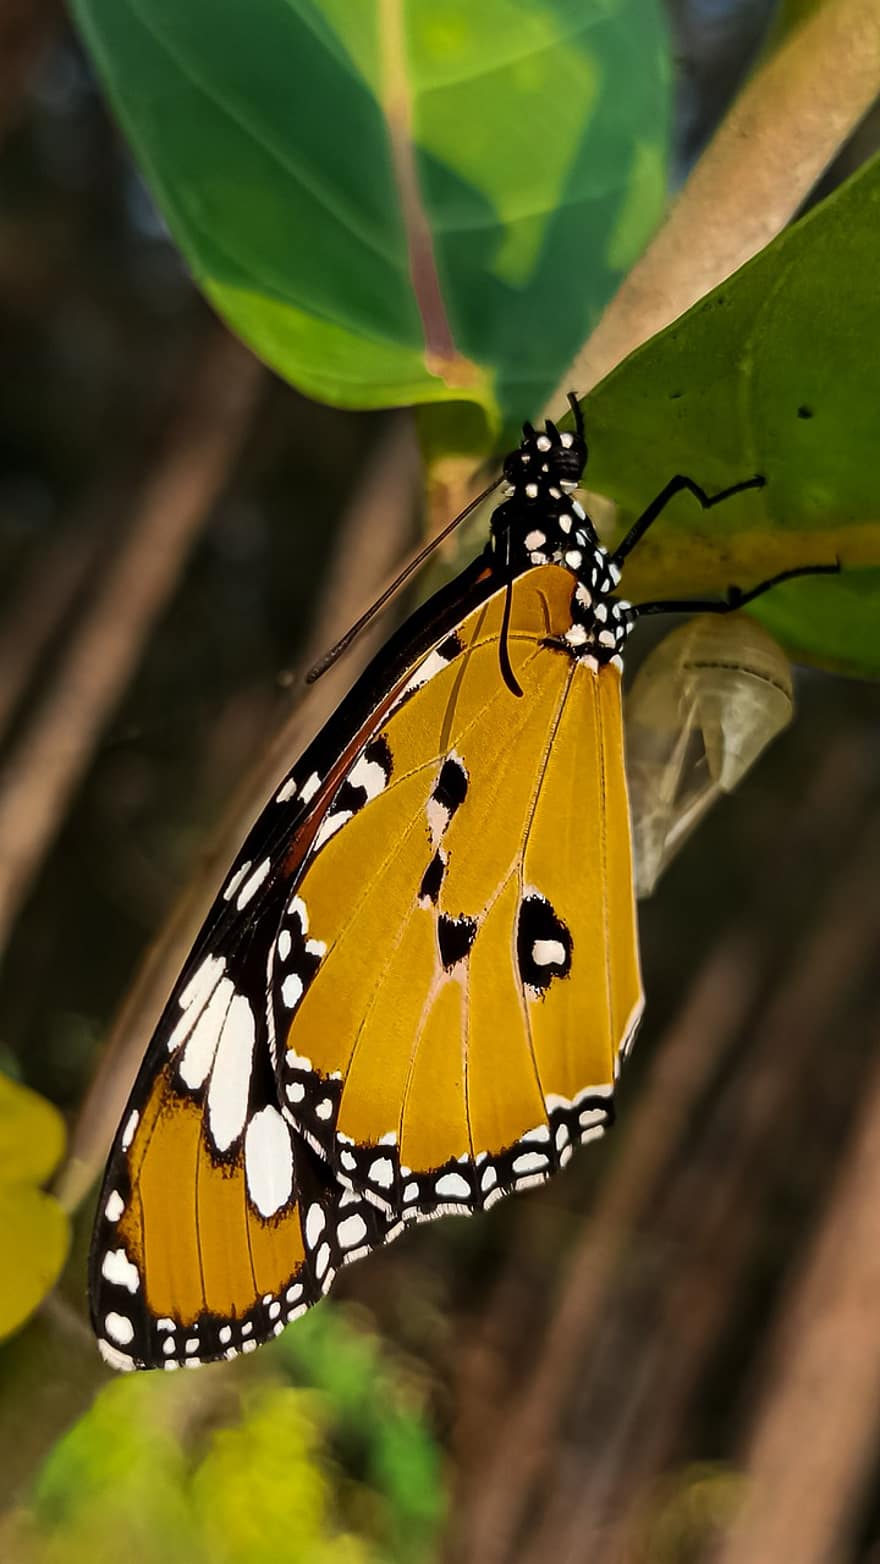 borboleta, inseto, inseto com asas, Asas de borboleta, fauna, natureza, fechar-se, multi colorido, macro, cor verde, amarelo